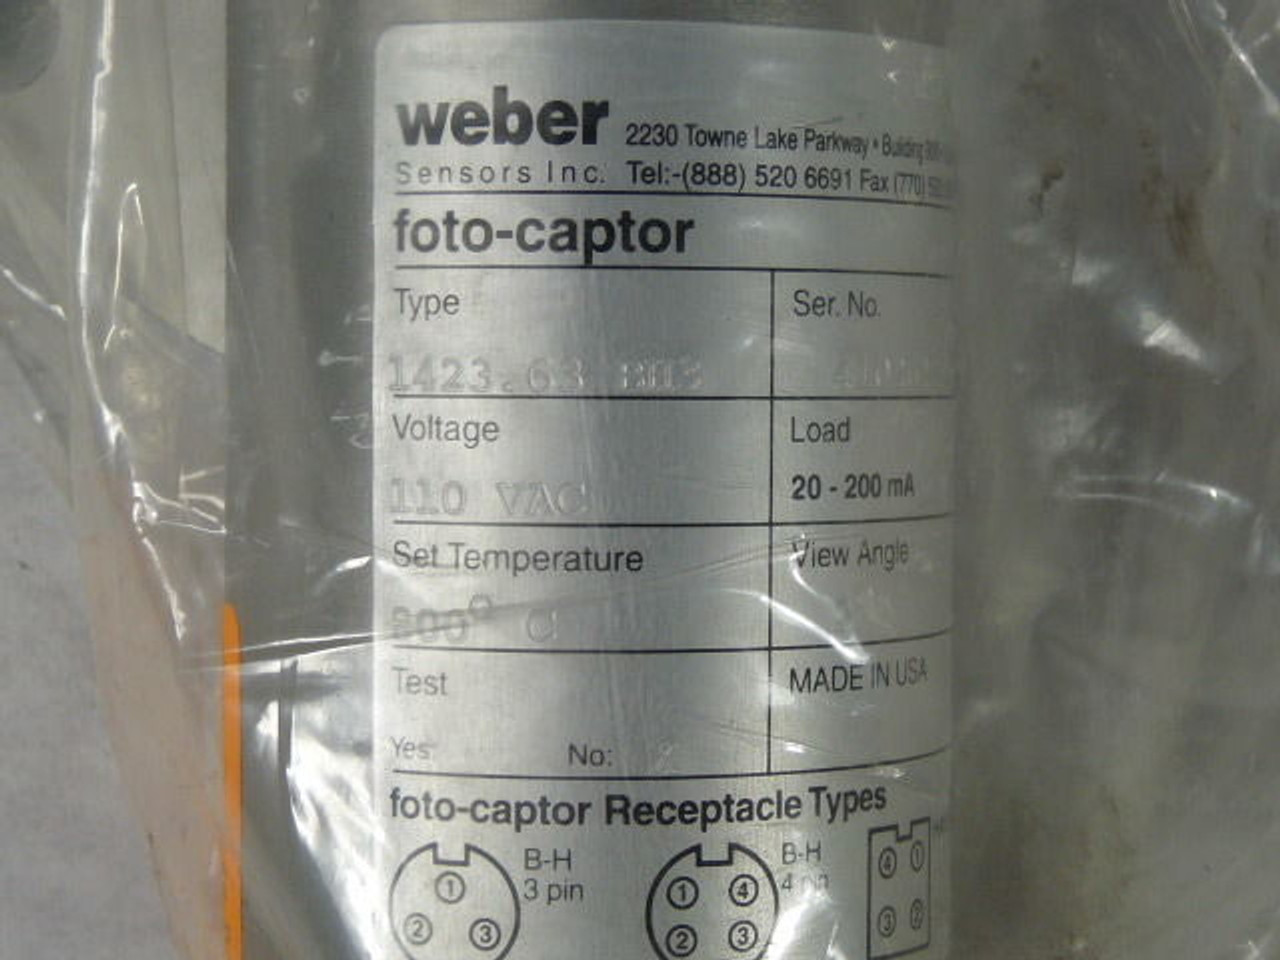 Weber 1423.63 Foto Captor Sensor 20-200MA 110 VAC 2-Degree Angle ! NEW !